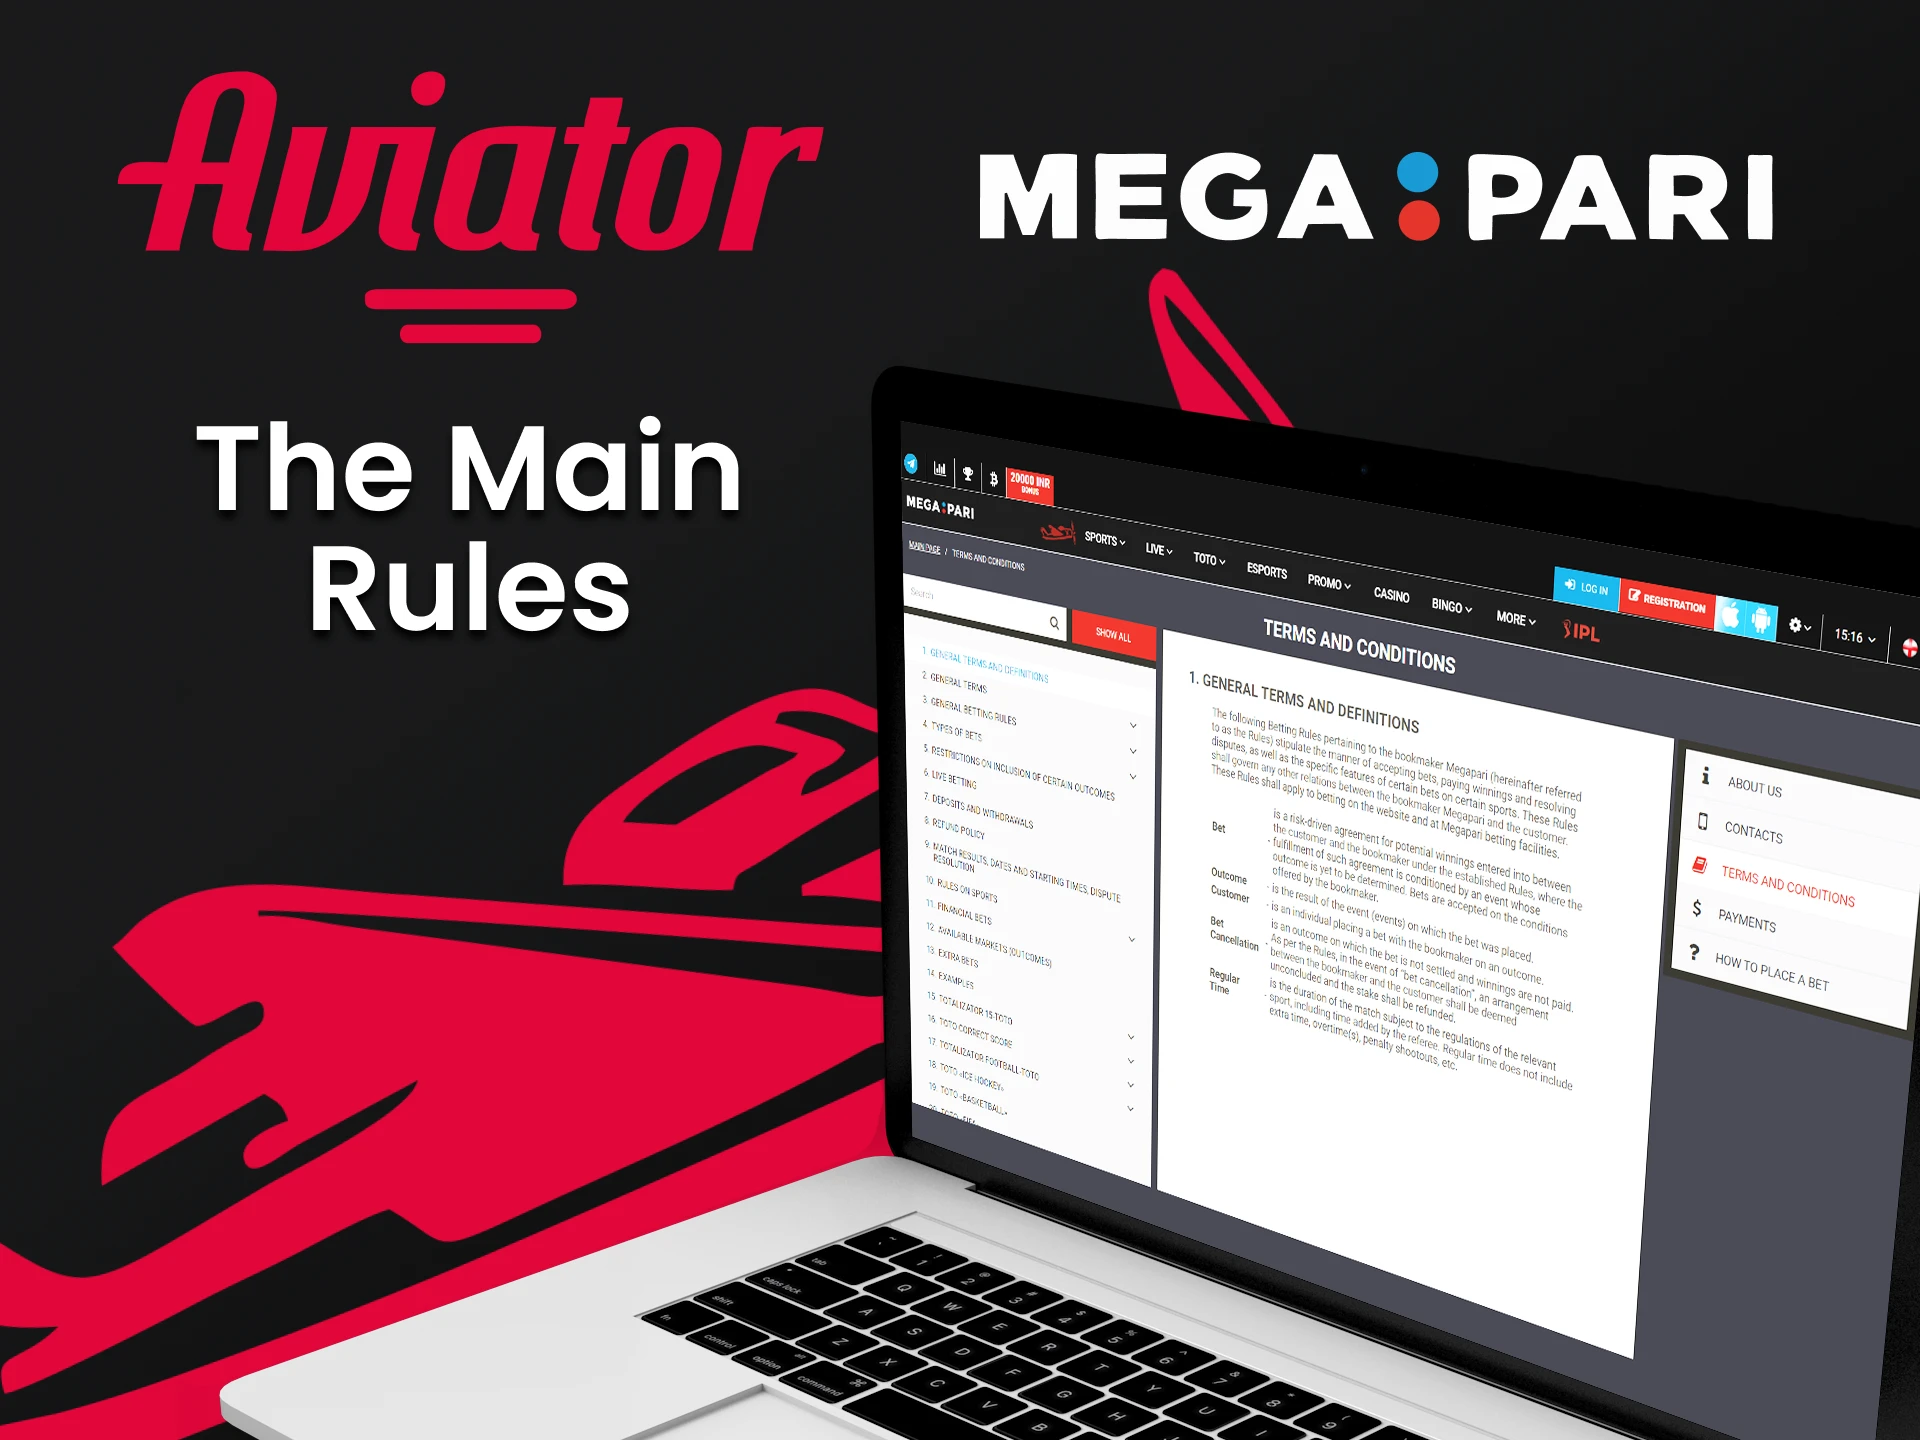 Learn the rules of the Megapari service.